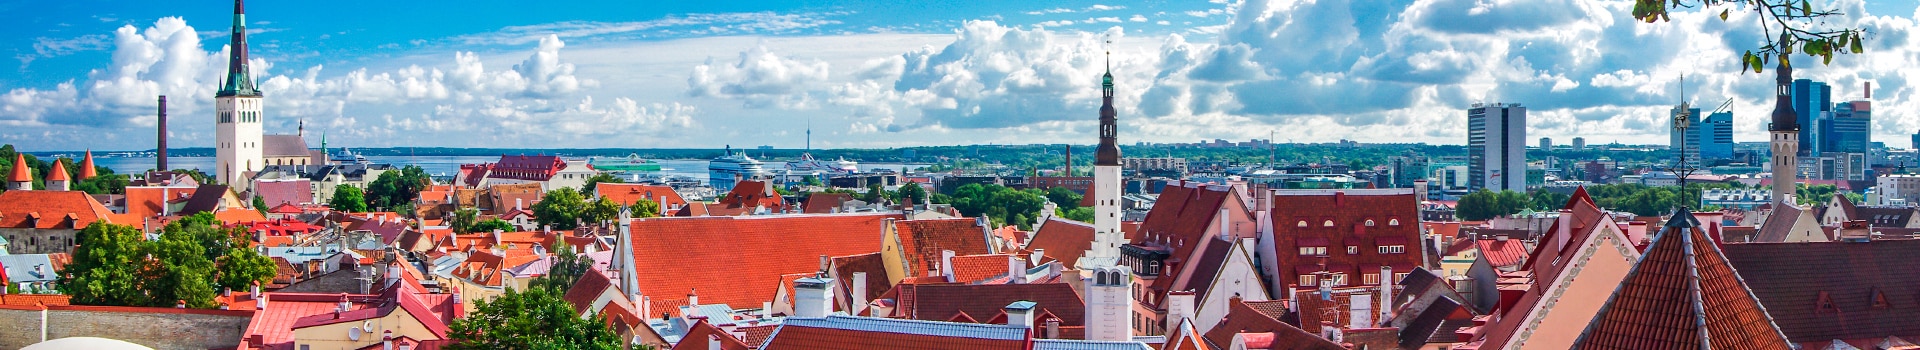 Berlin - Tallinn lennart meri